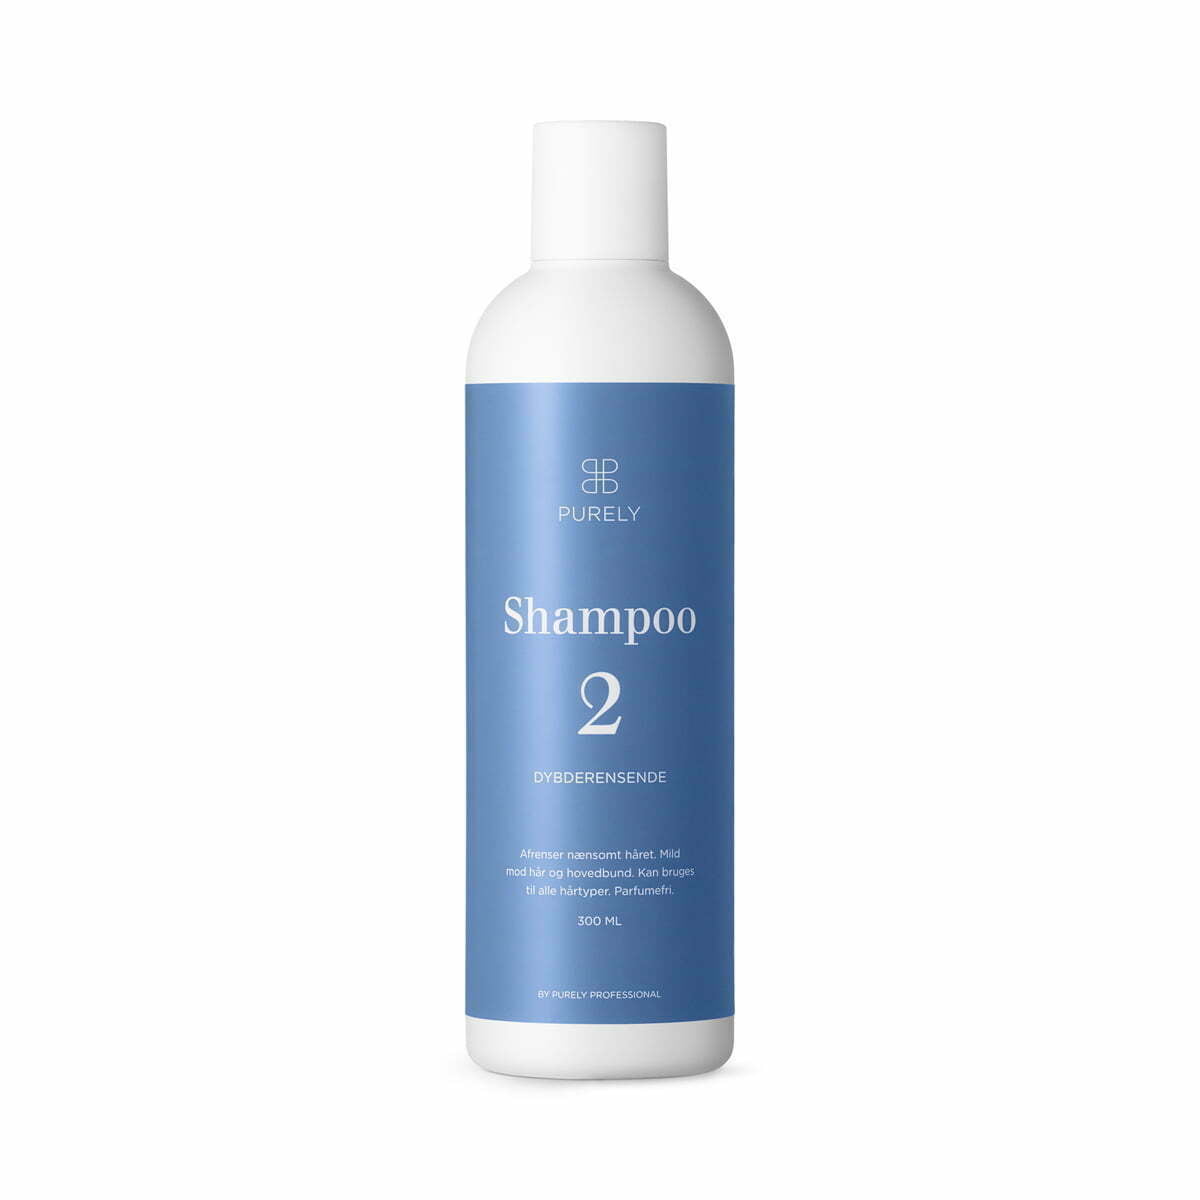 Shampoo 2 - 300ml